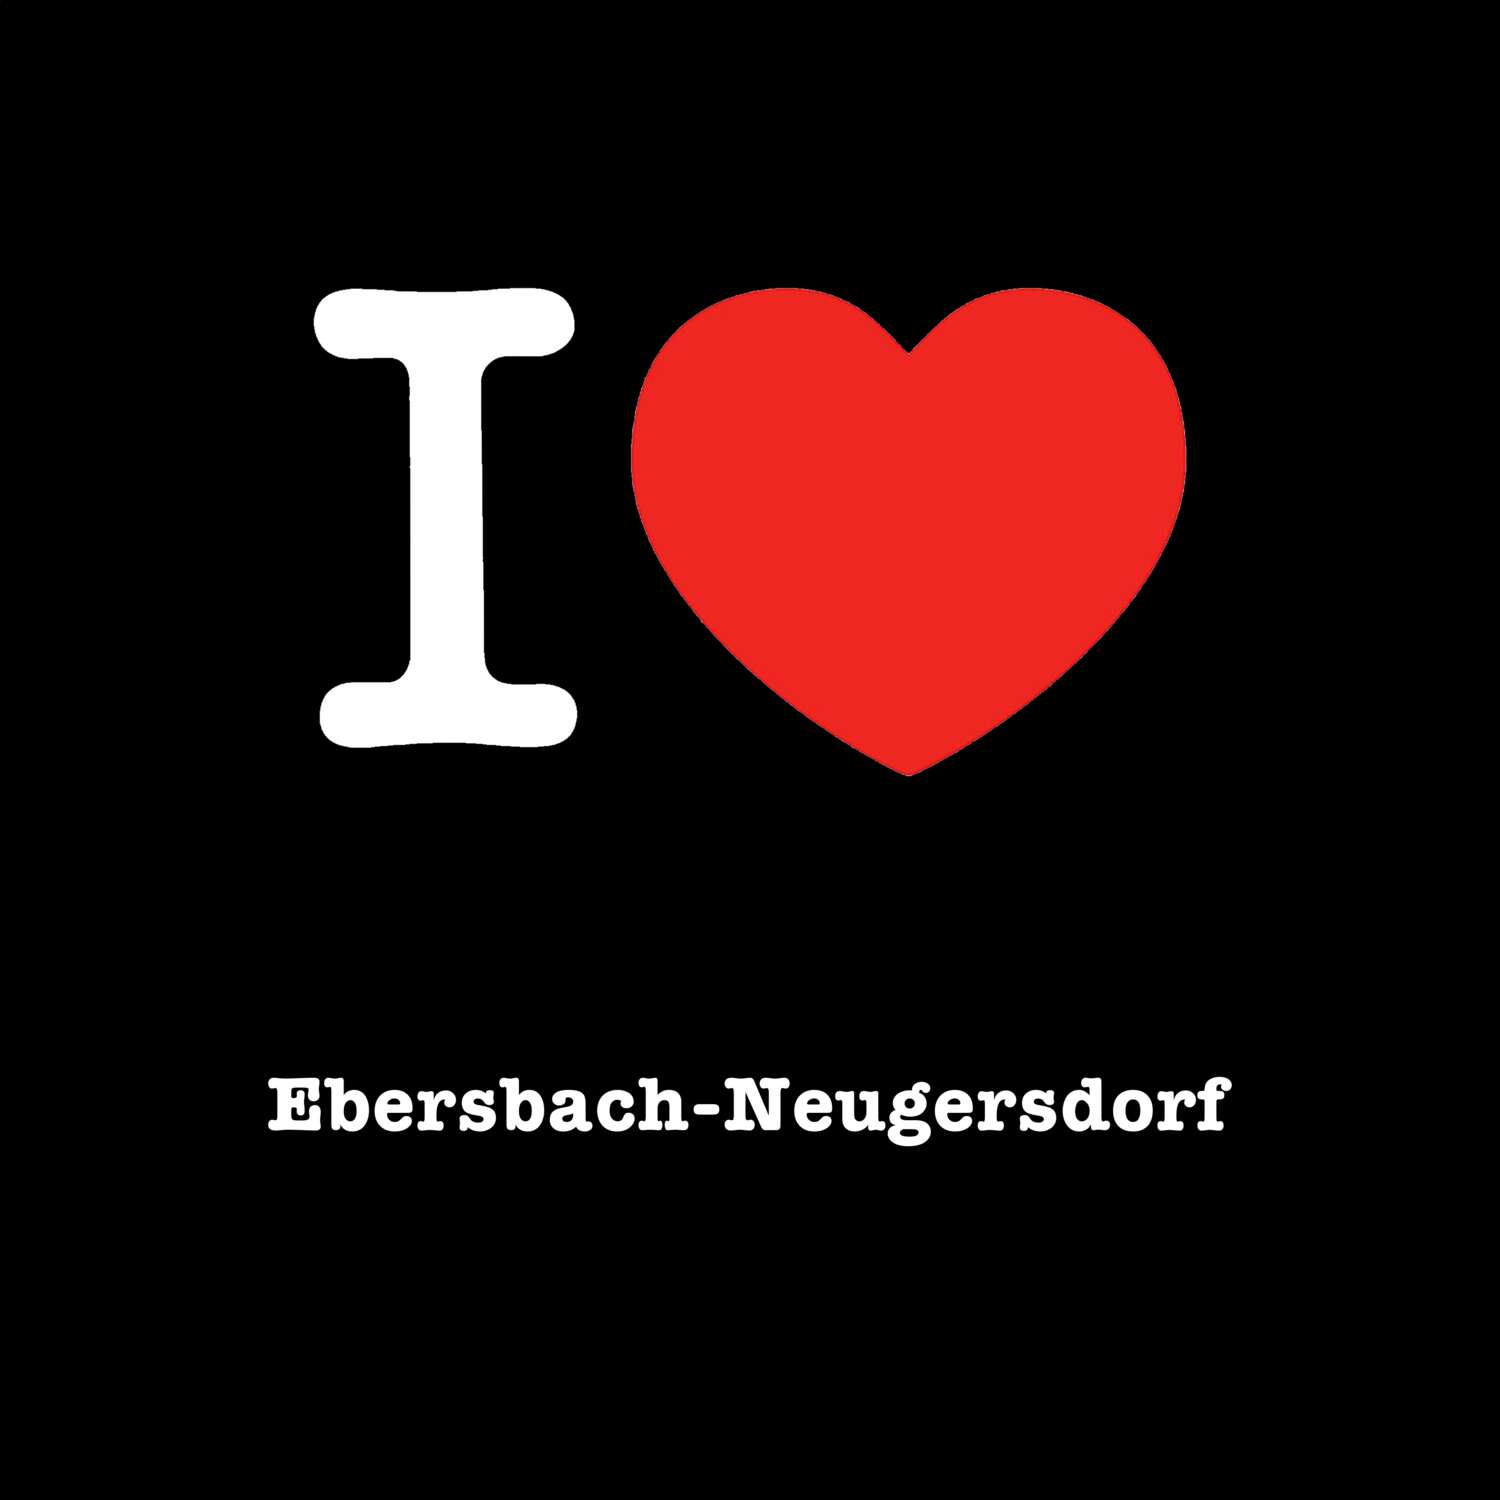 Ebersbach-Neugersdorf T-Shirt »I love«